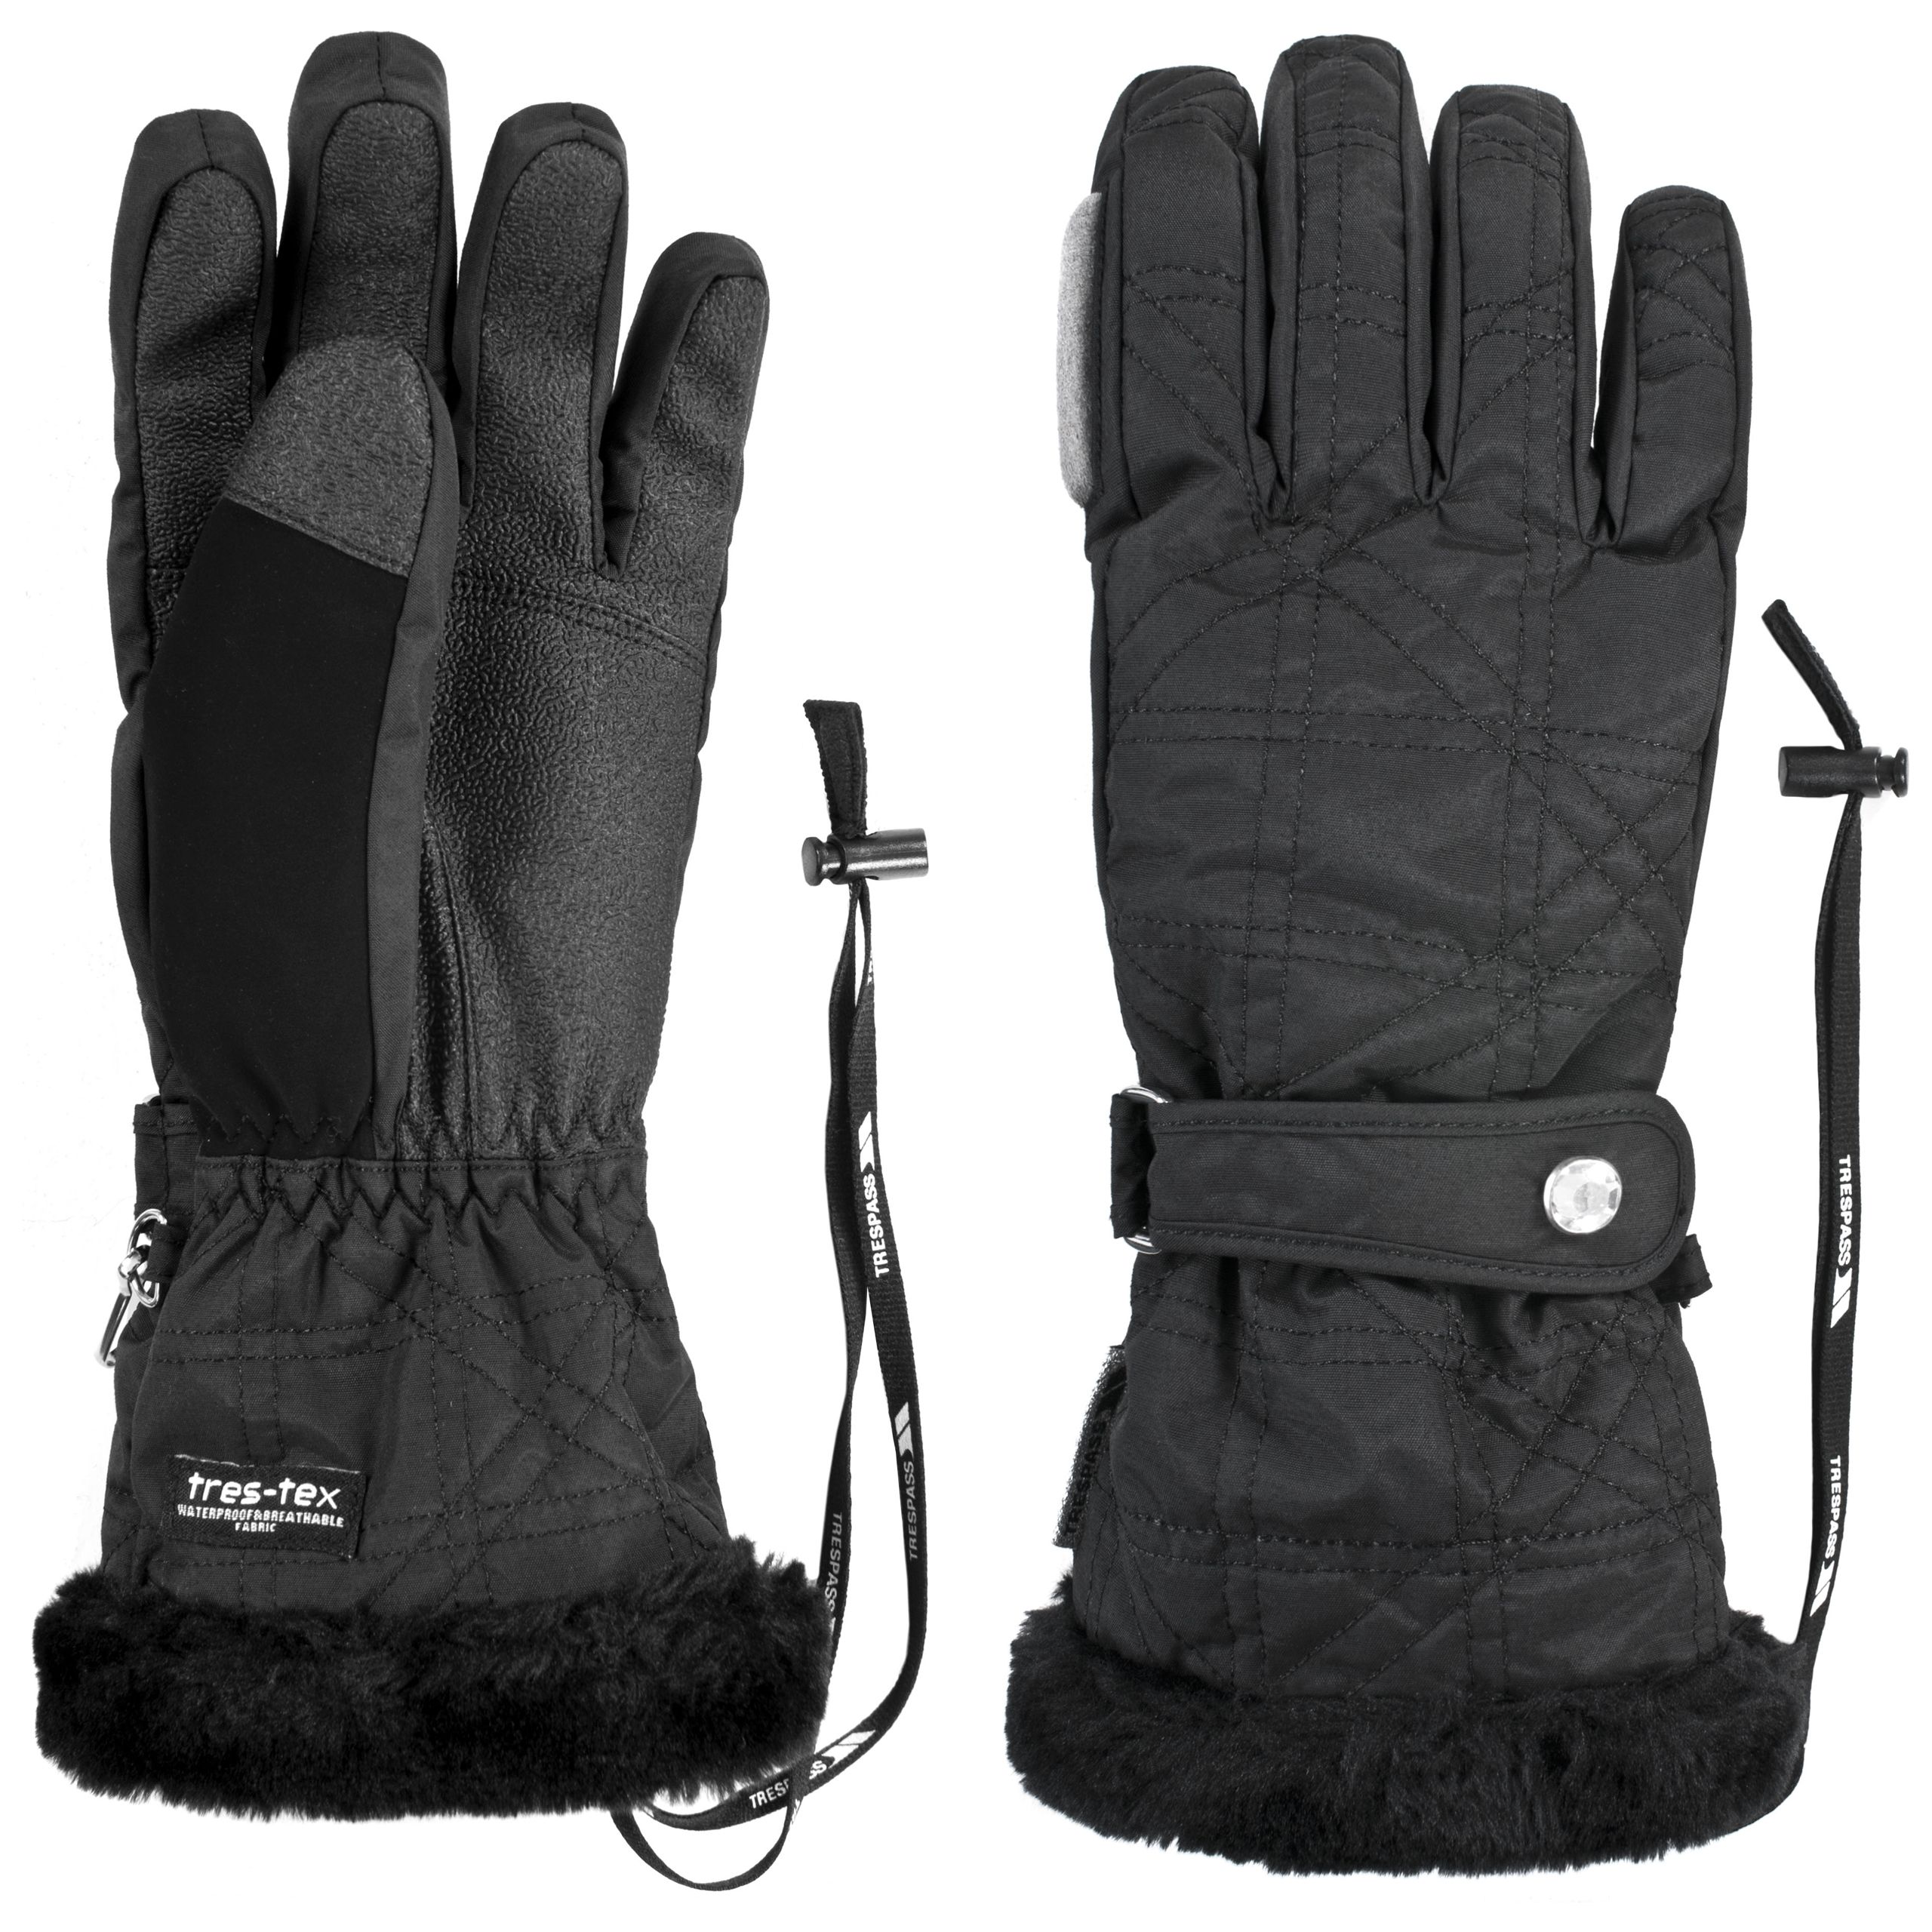 Gem Adults Ski Gloves